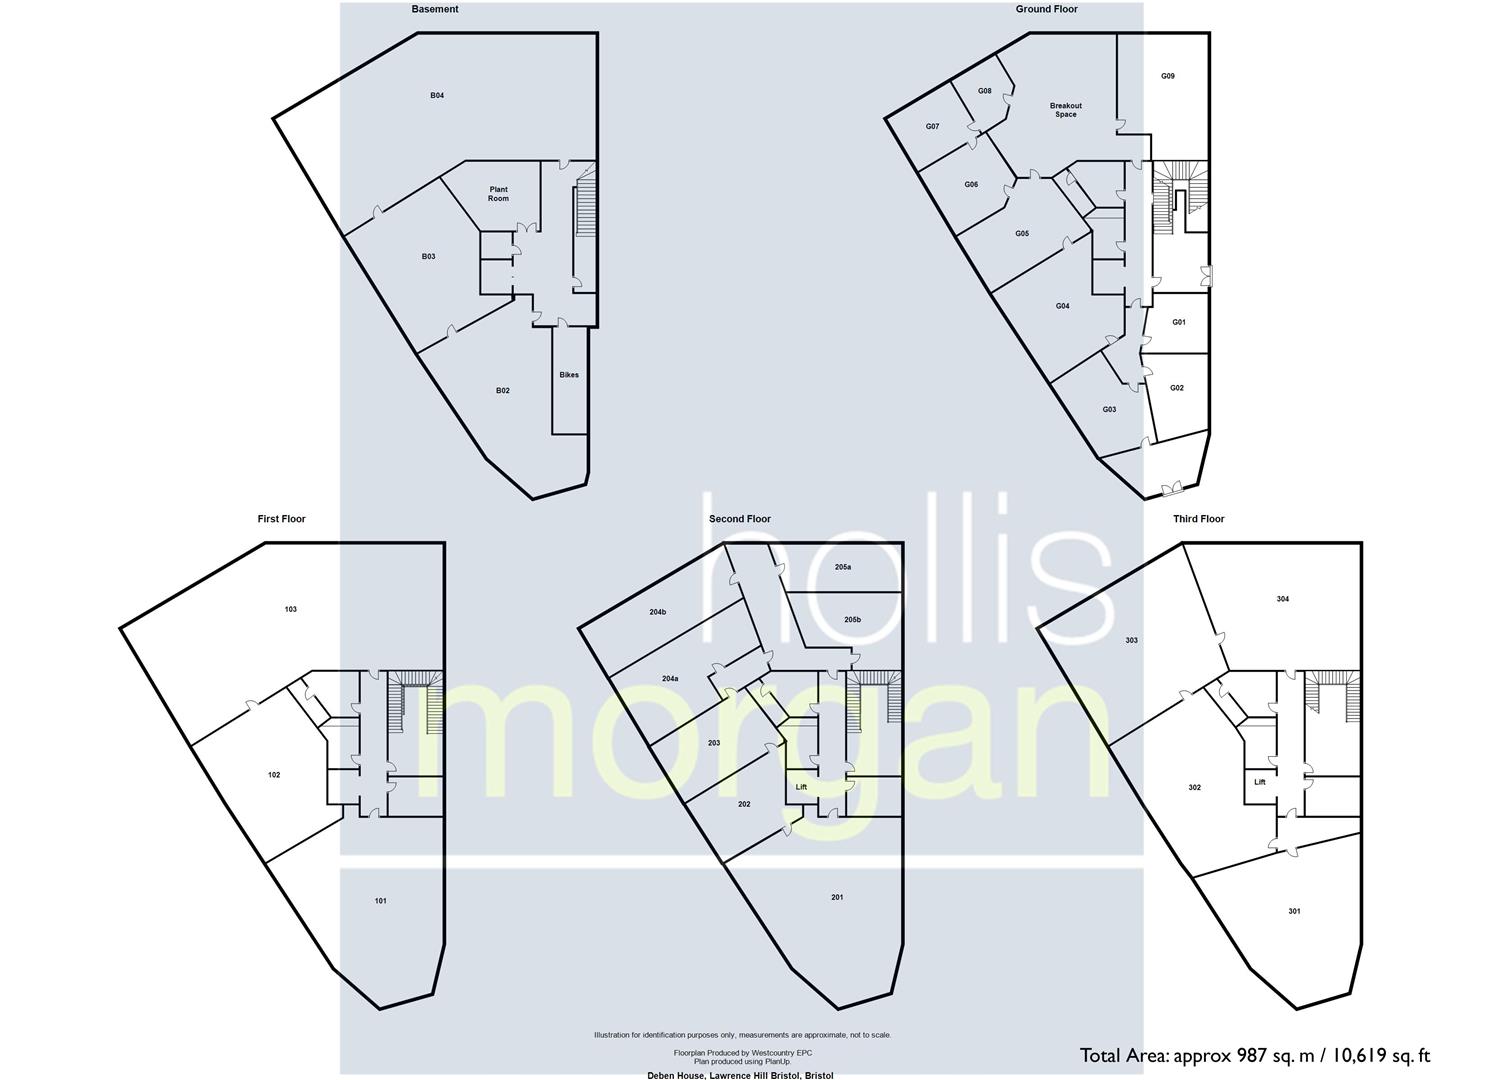 Floorplans For £120k INCOME PA / RESI DEVELOPMENT - OLD MARKET